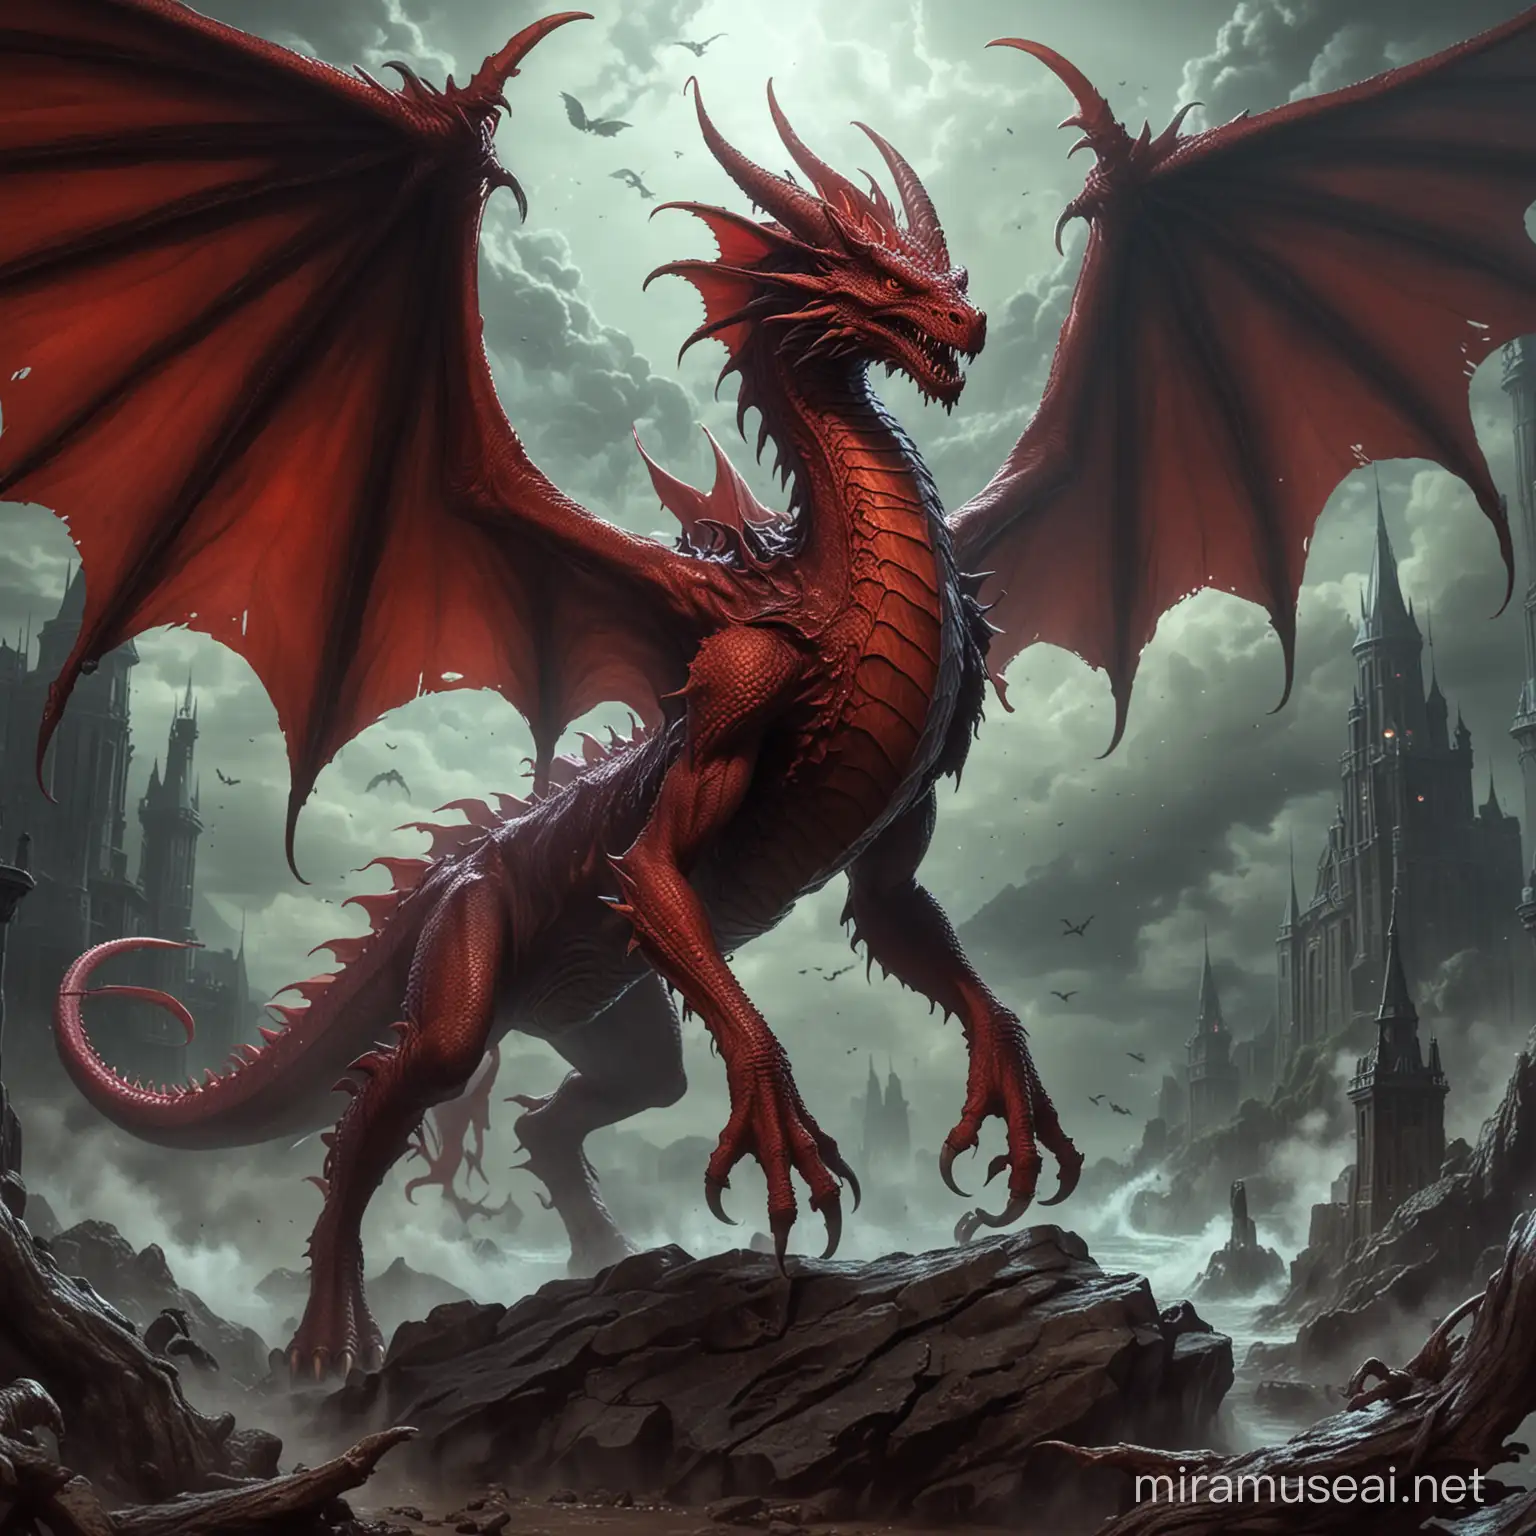 red dragon, four legs, wings, lovecraftian, eldritch, demonic, anime